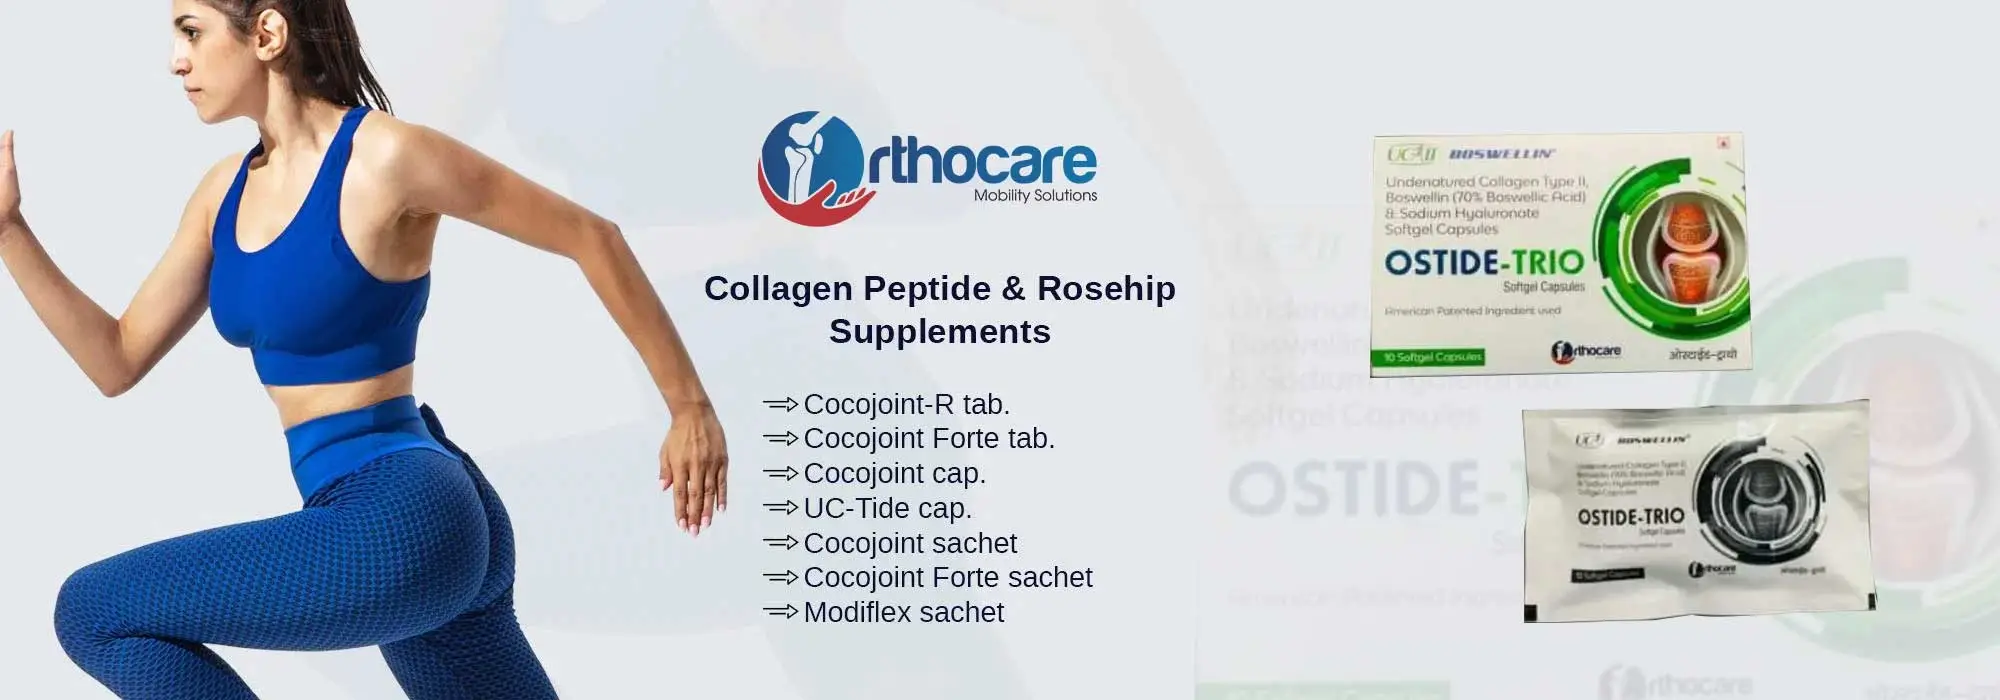 Collagen Peptide & Rosehip Supplements Suppliers in Bandipora